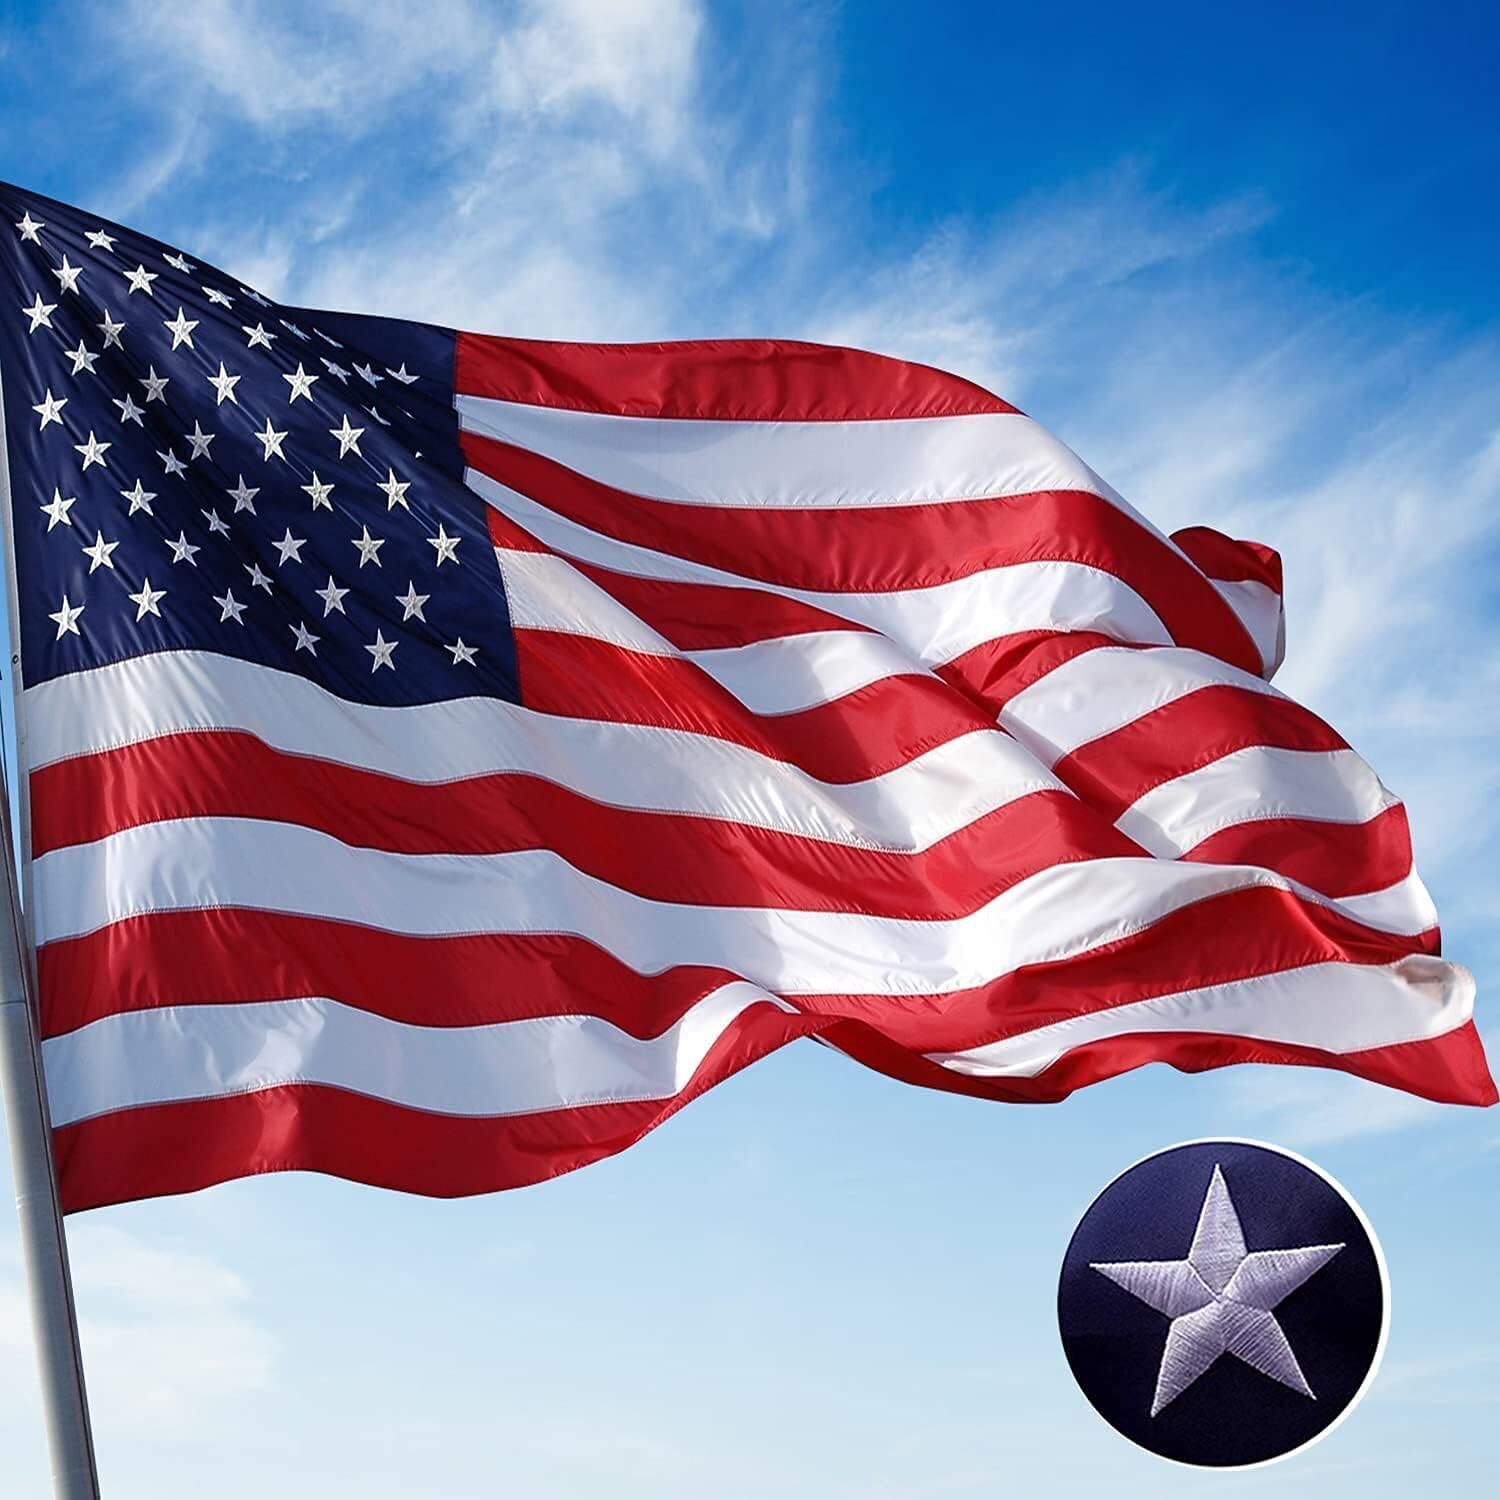 Jetlifee American Flag American Flags American Flag 6x10 Outdoor US Flags wit...